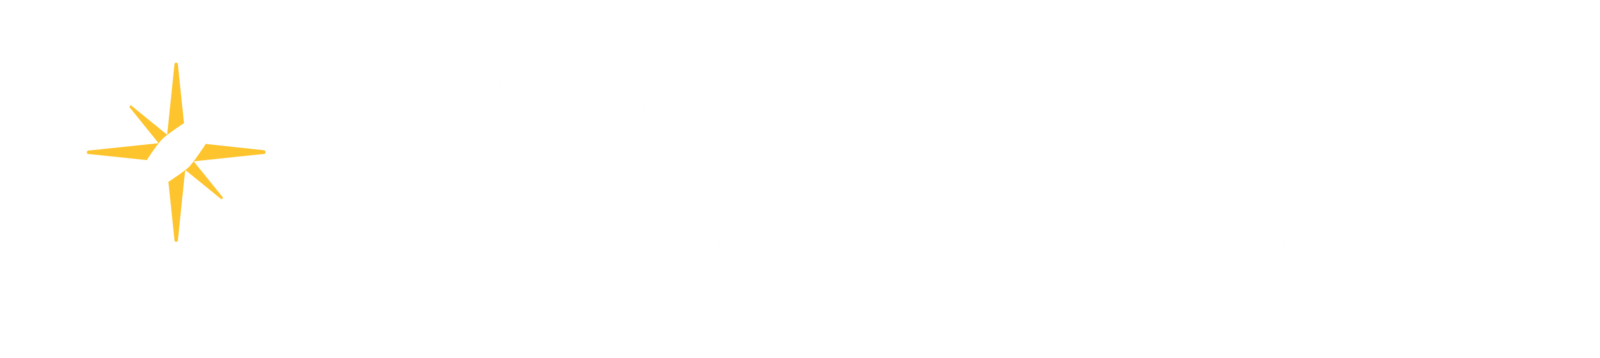 HudsonWay Immersion School Sponsors Summit, NJ, Screen on the Green